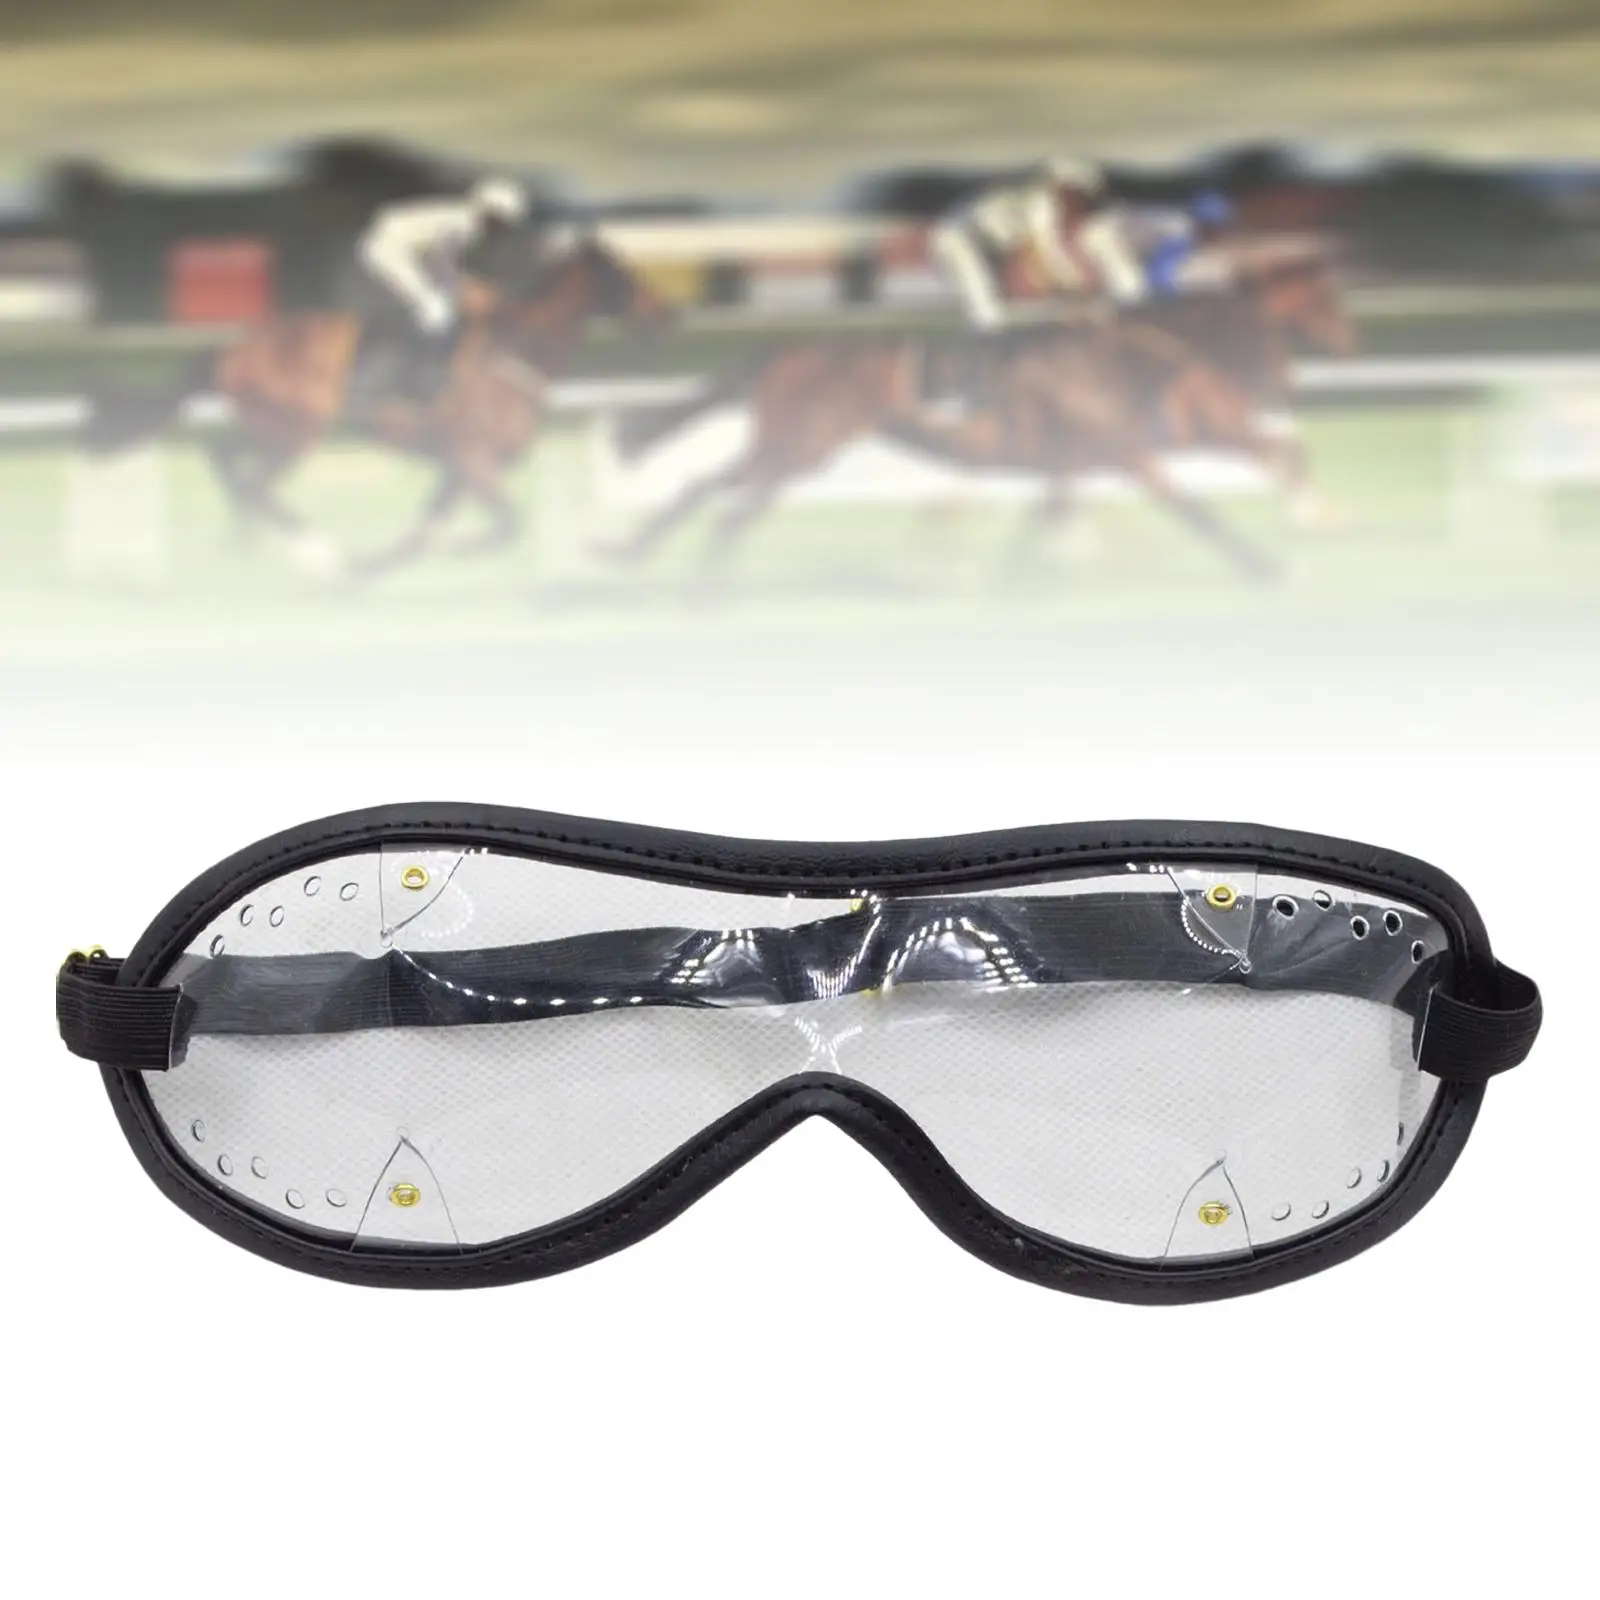 Outdoor Glasses Adjustable Strap Eye Protection Windproof Dustproof Goggles